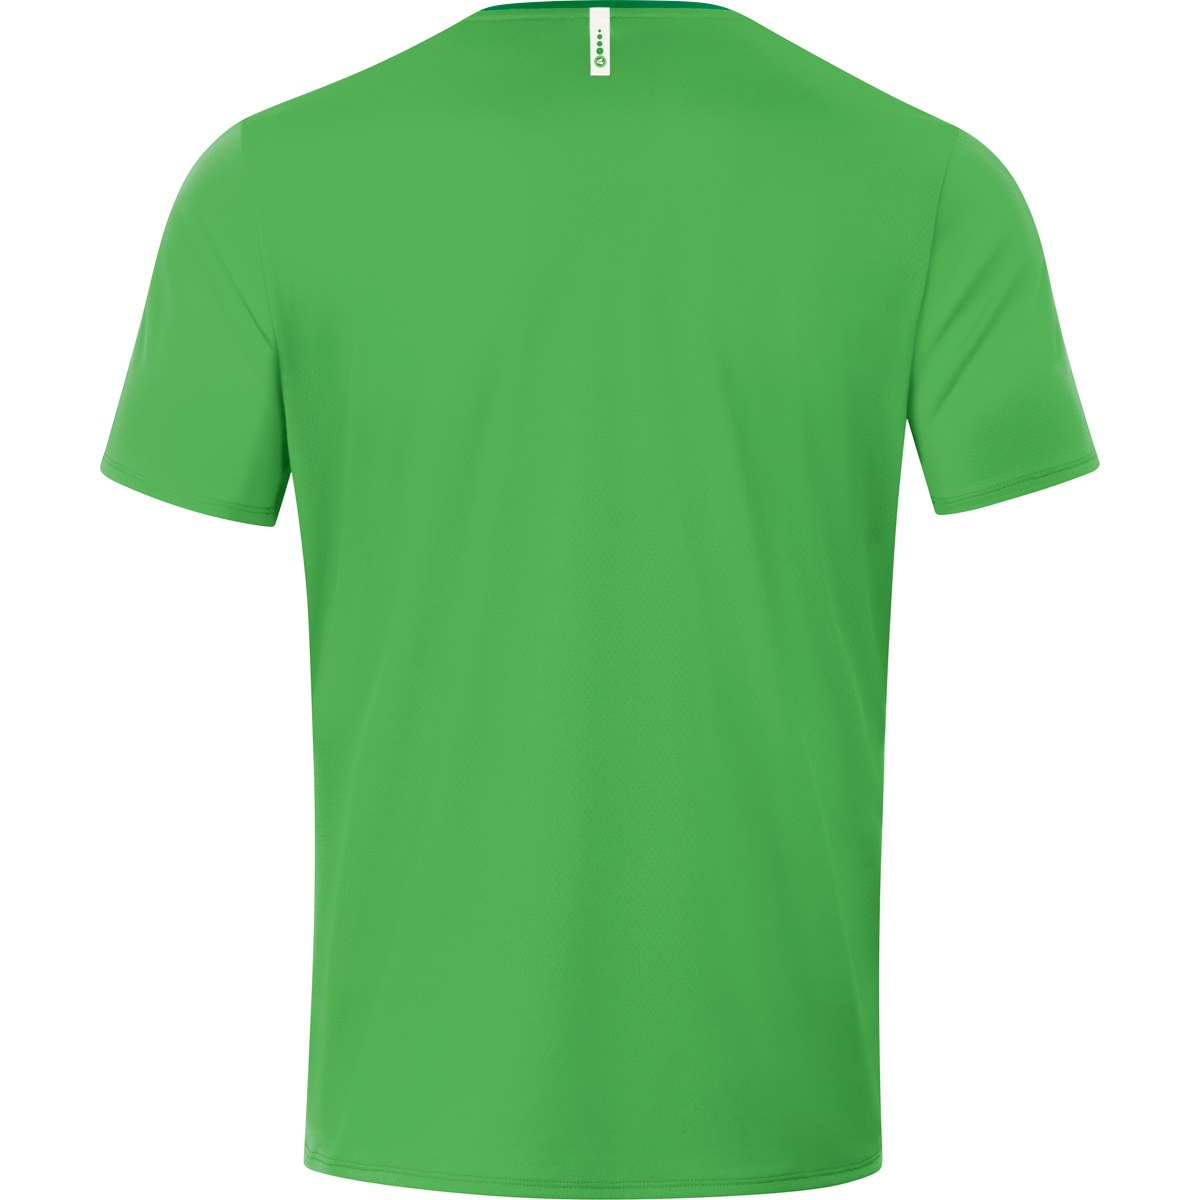 Kinder, soft JAKO T-Shirt 2.0 Gr. Champ 6120 green/sportgrün, 116,